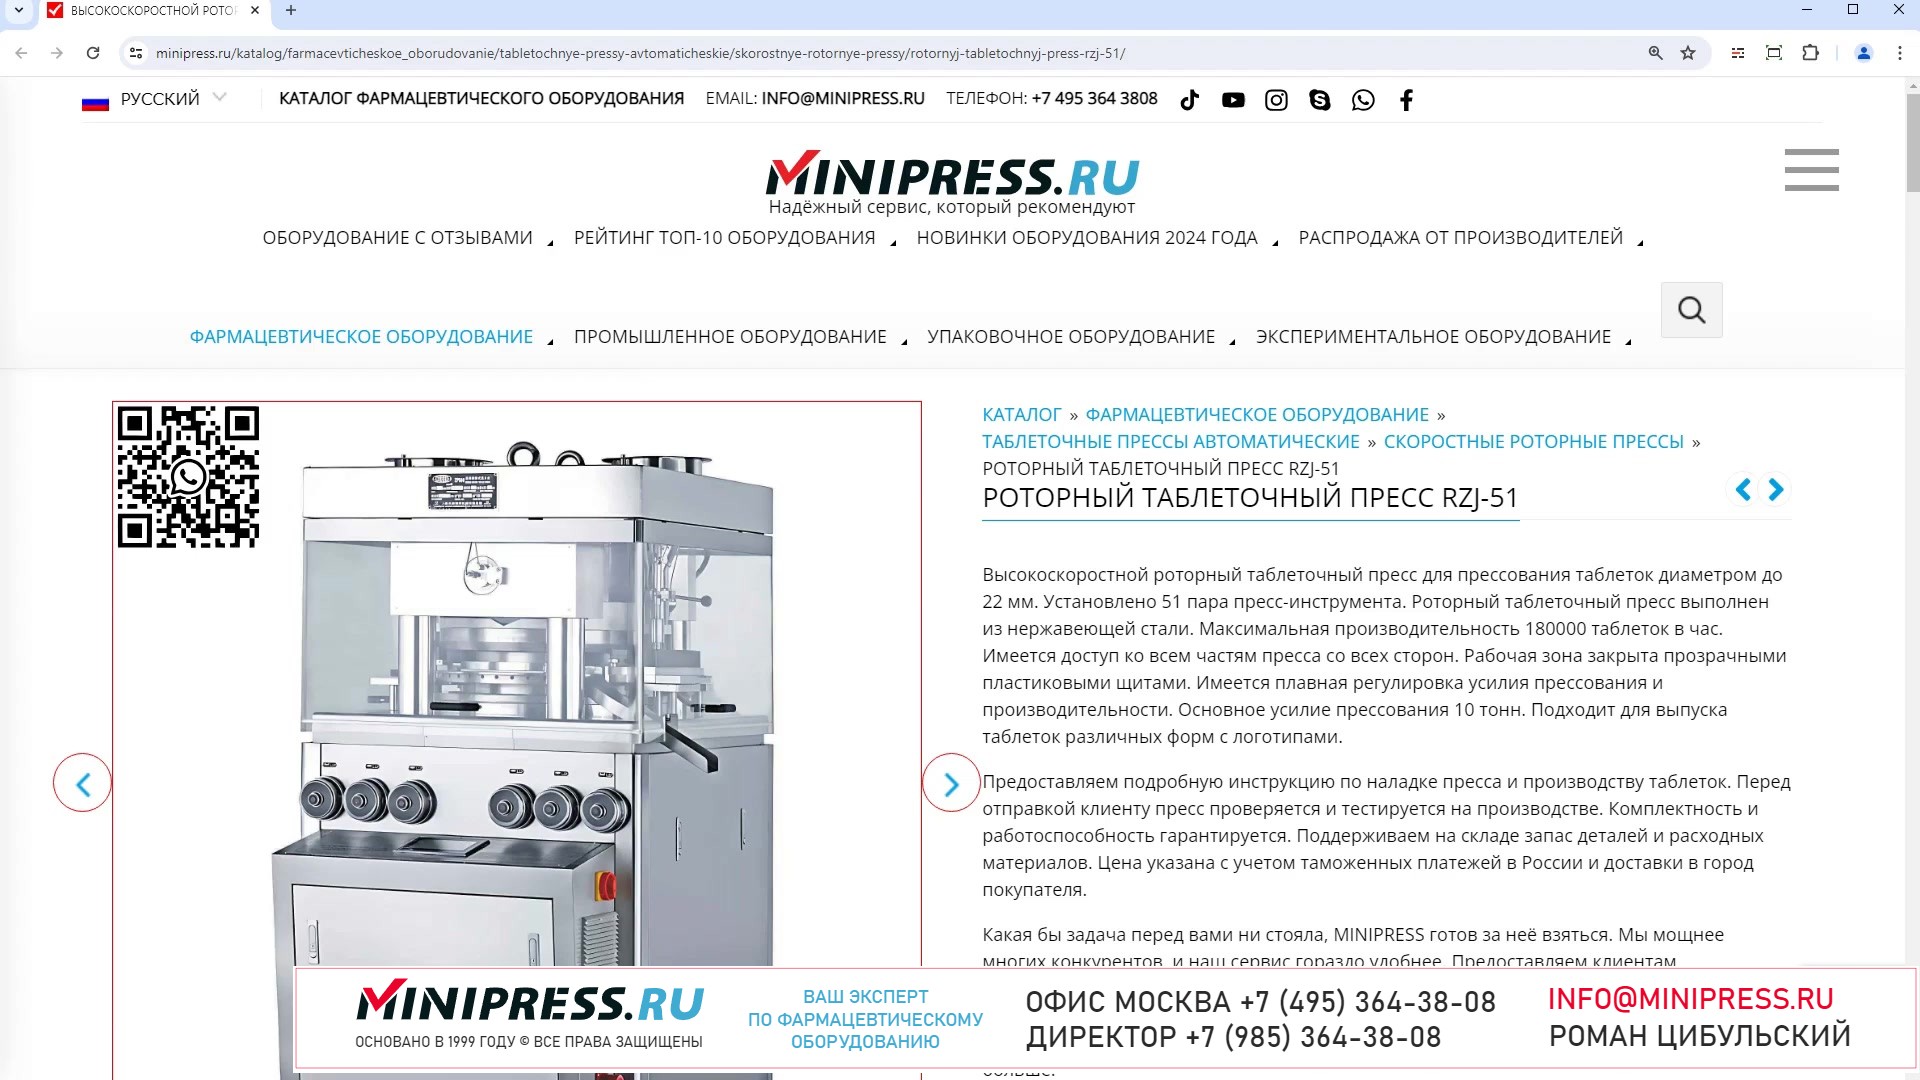 Minipress.ru Роторный таблеточный пресс RZJ-51